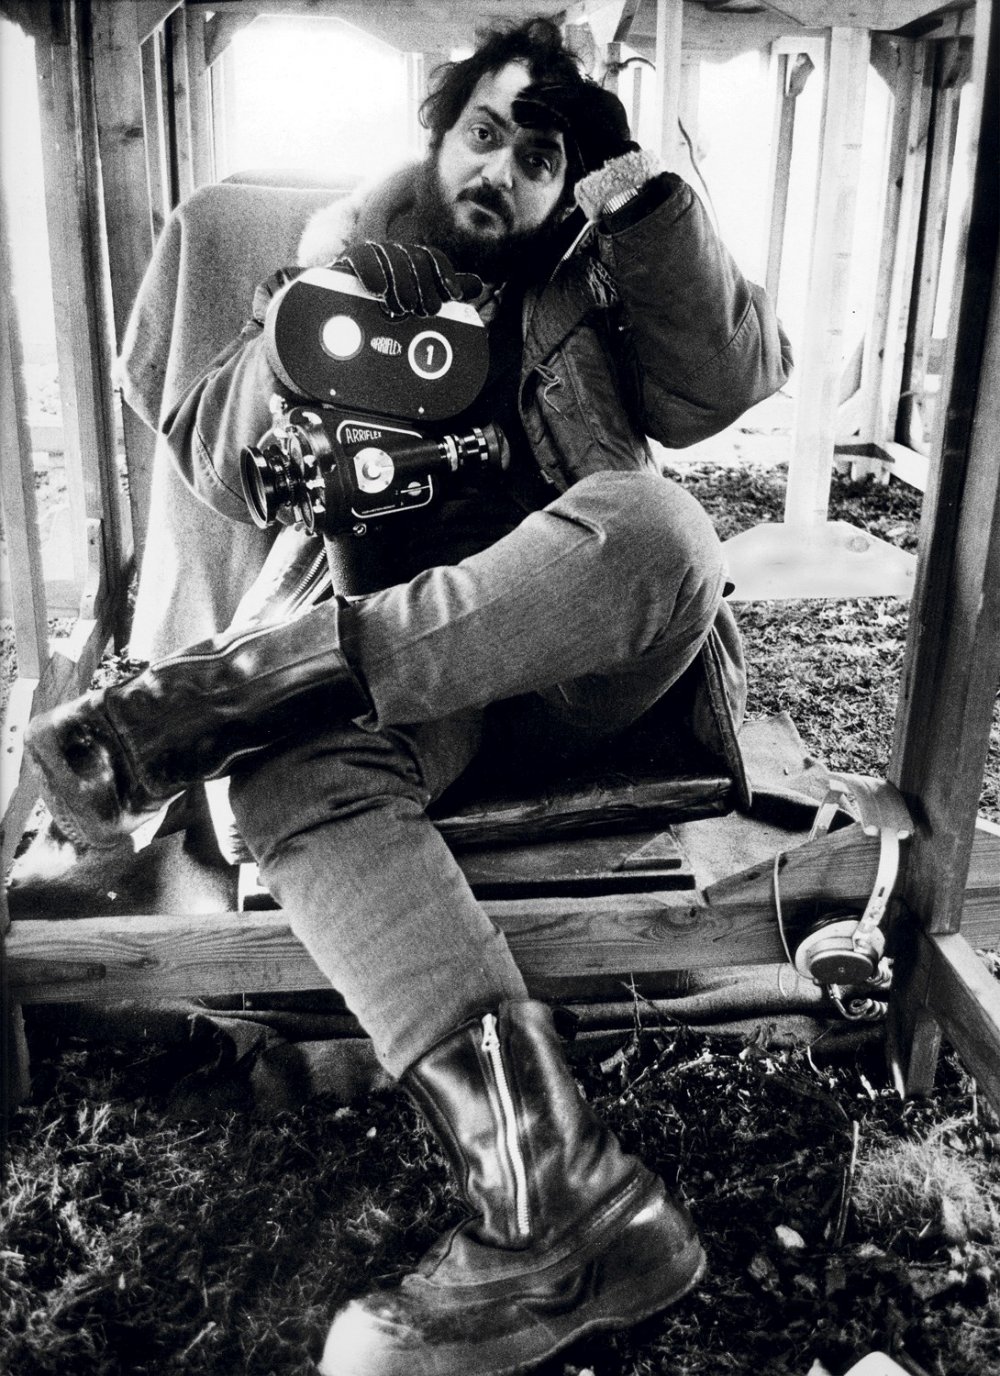 Stanley Kubrick, photographed by Dmitri Kasterine in 1970 on the set of A Clockwork Orange.